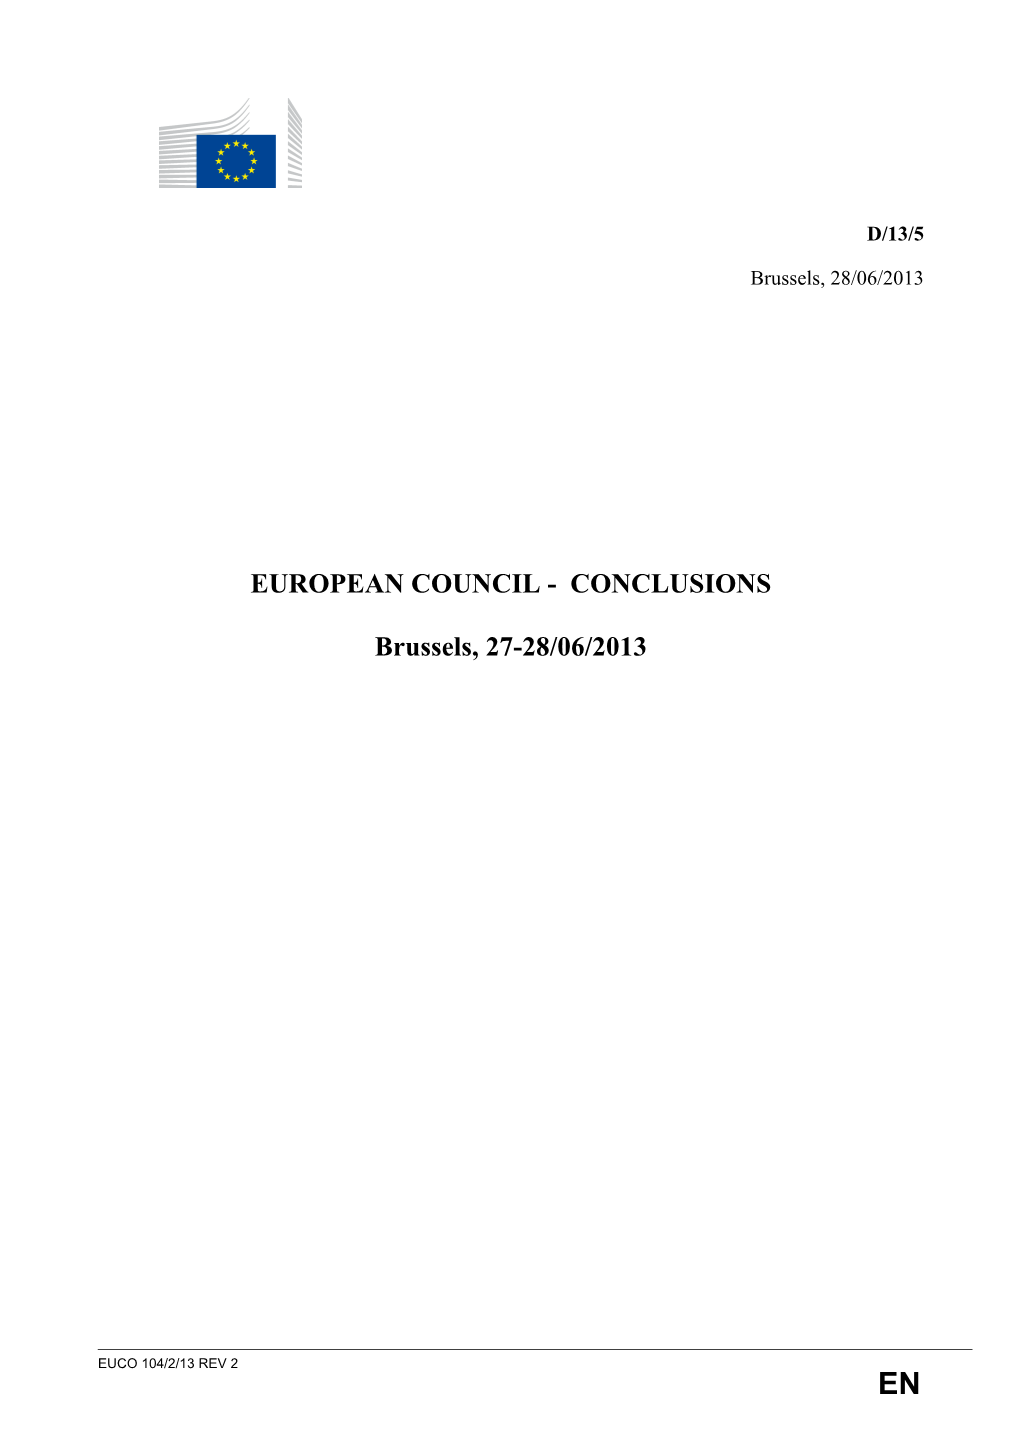 EUROPEAN COUNCIL - CONCLUSIONS Brussels, 27-28/06/2013